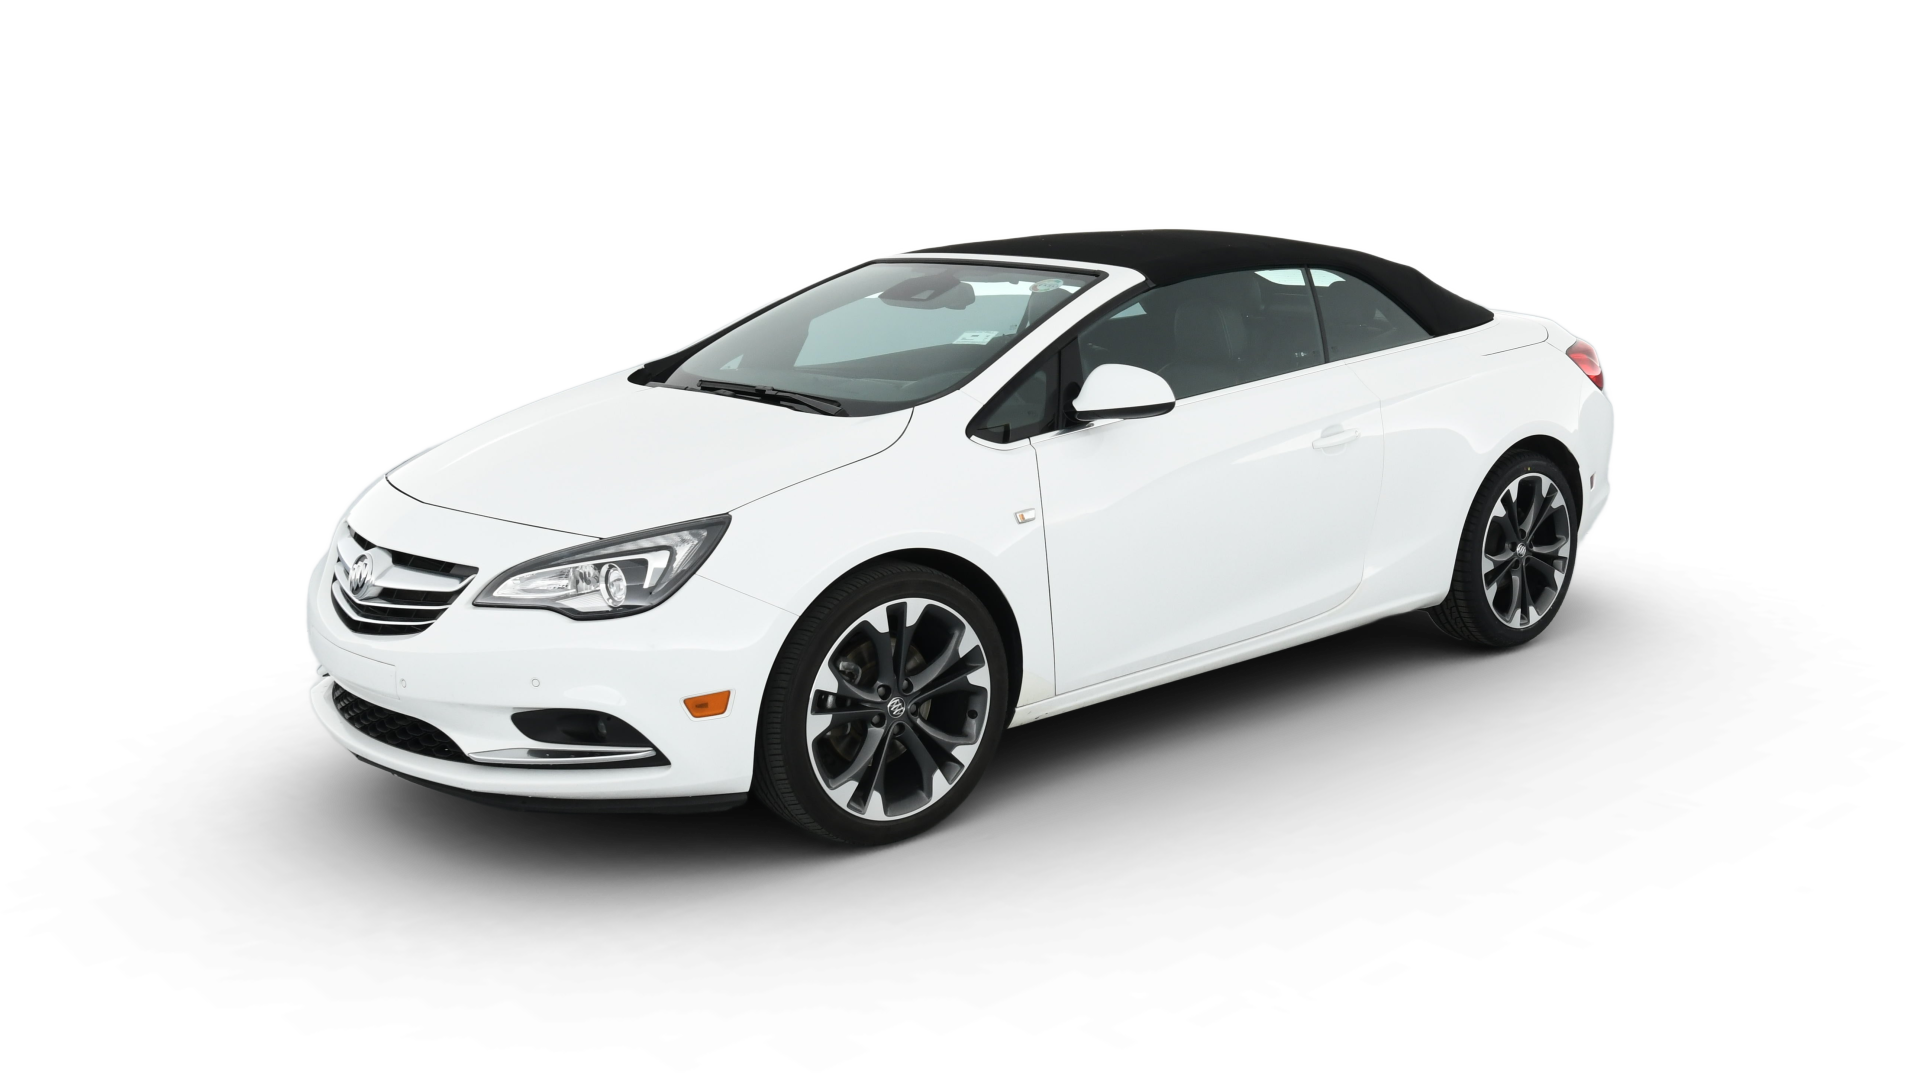 Buick Cascada model image.